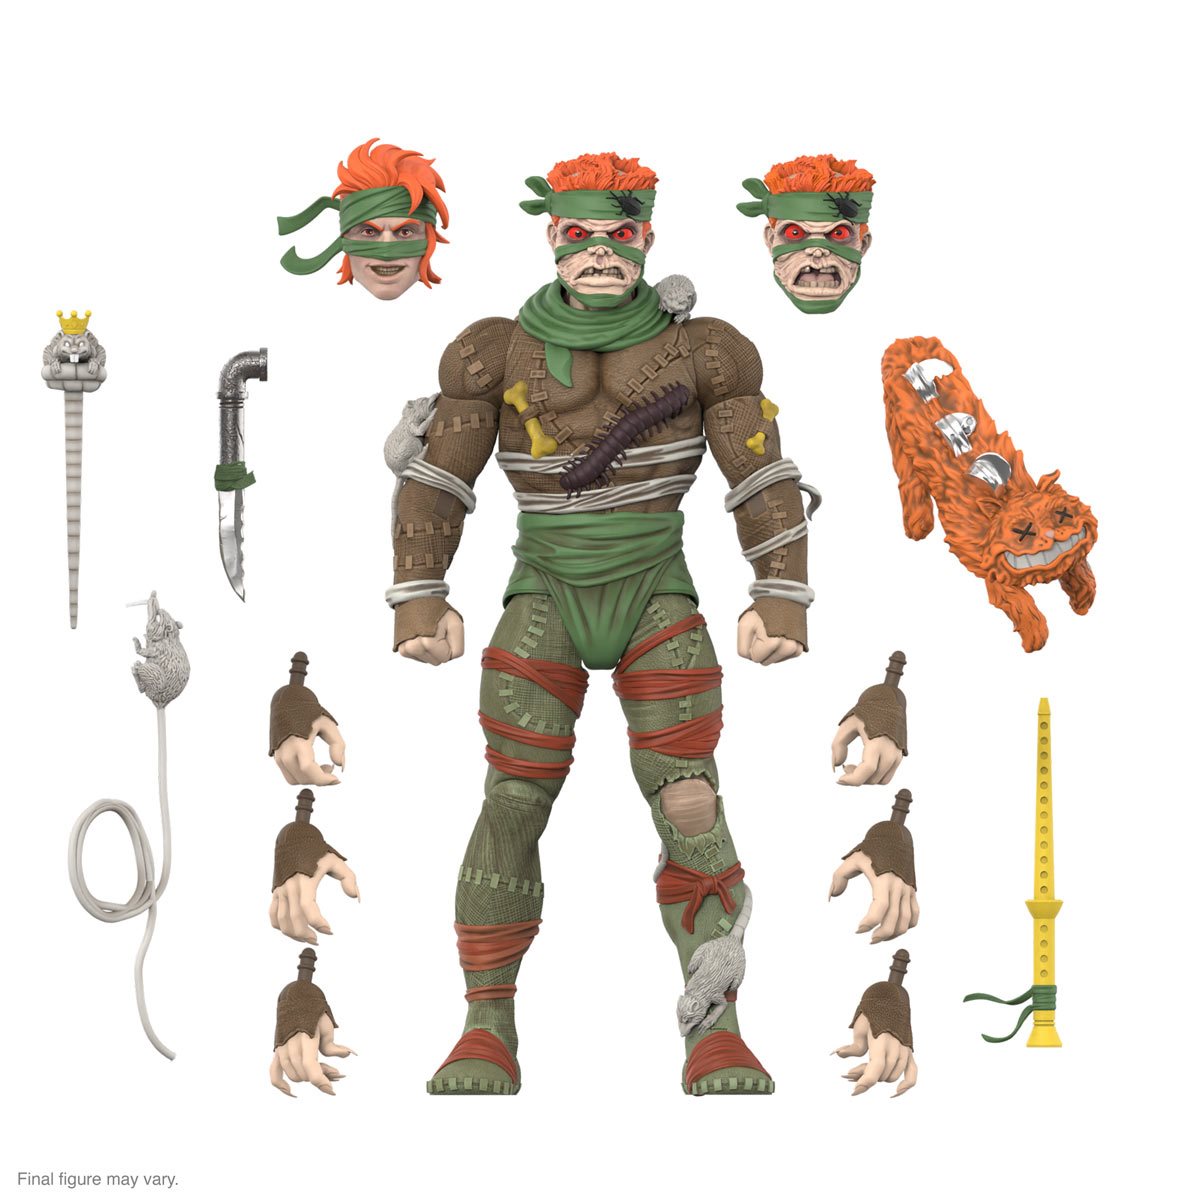 Action Figure Review: Rat King from Teenage Mutant Ninja Turtles